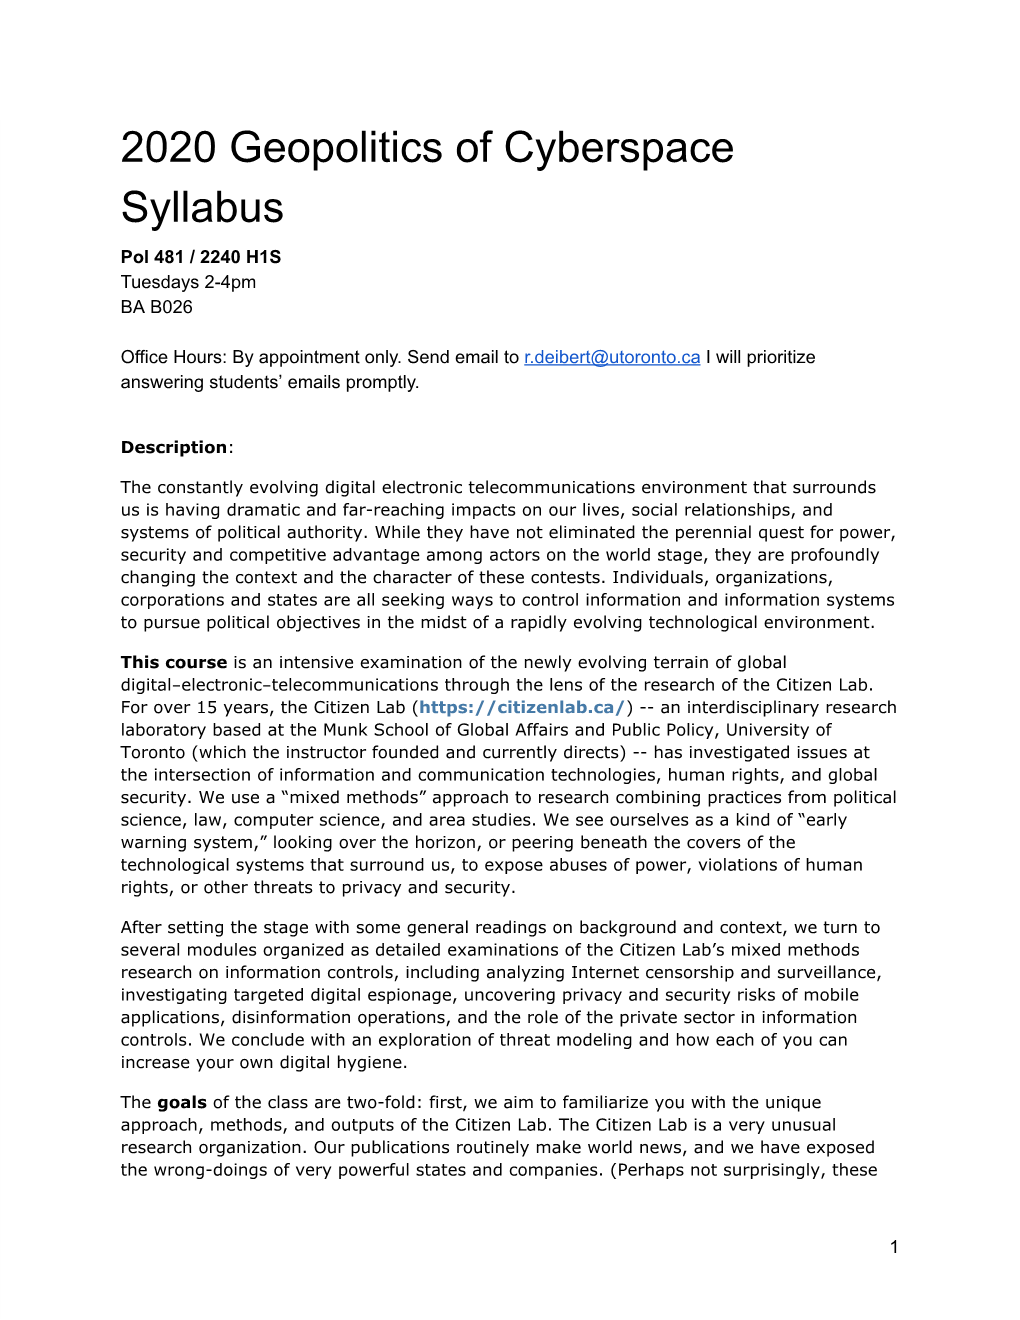 2020 Geopolitics of Cyberspace Syllabus Pol 481 / 2240 H1S Tuesdays 2-4Pm BA B026